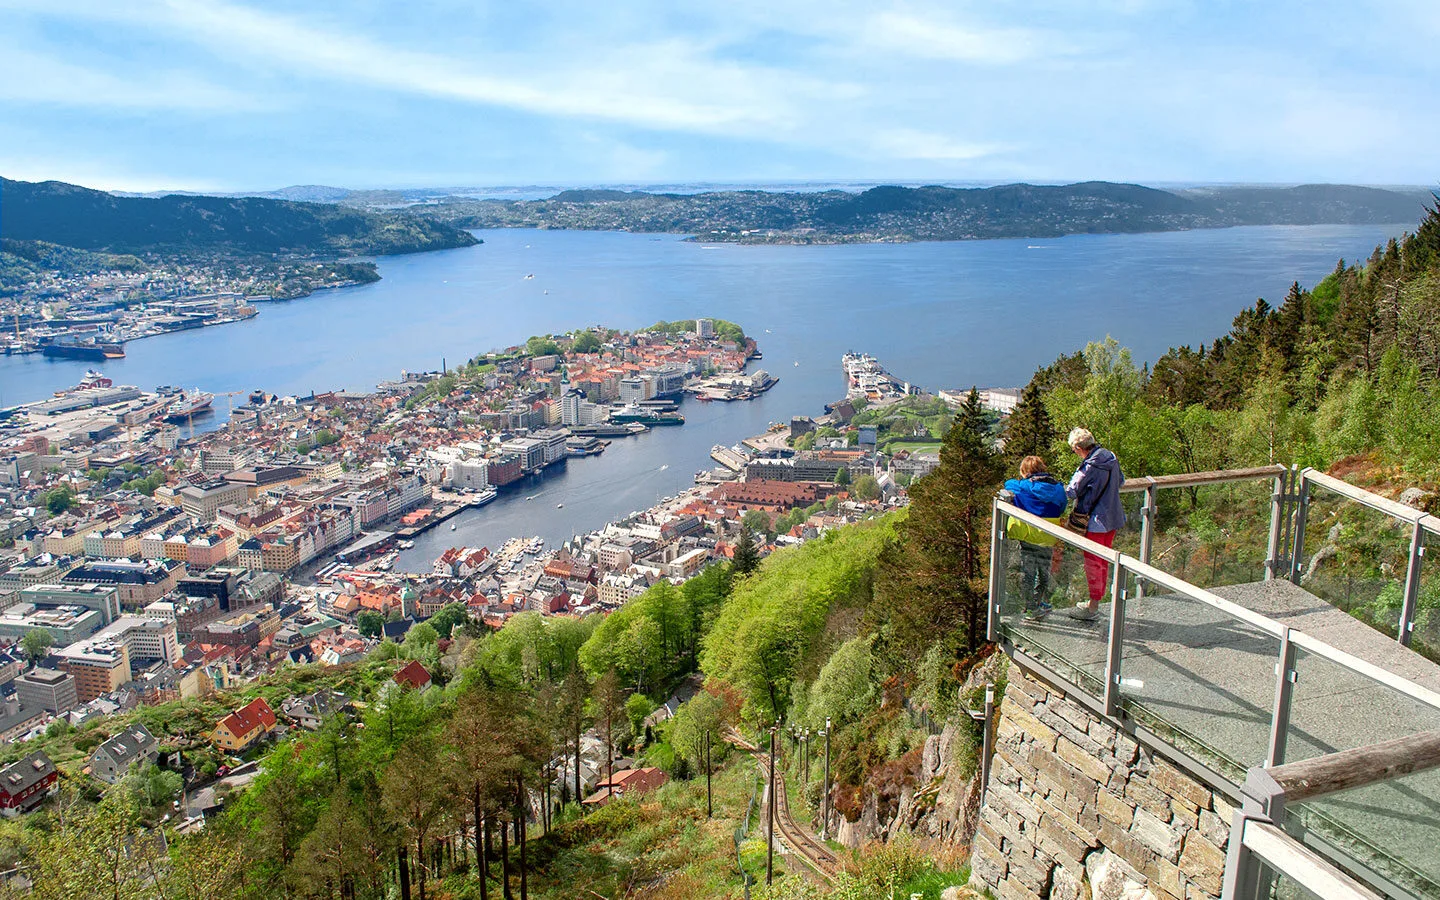 Views from the Fløibanen funicular railway in Bergen